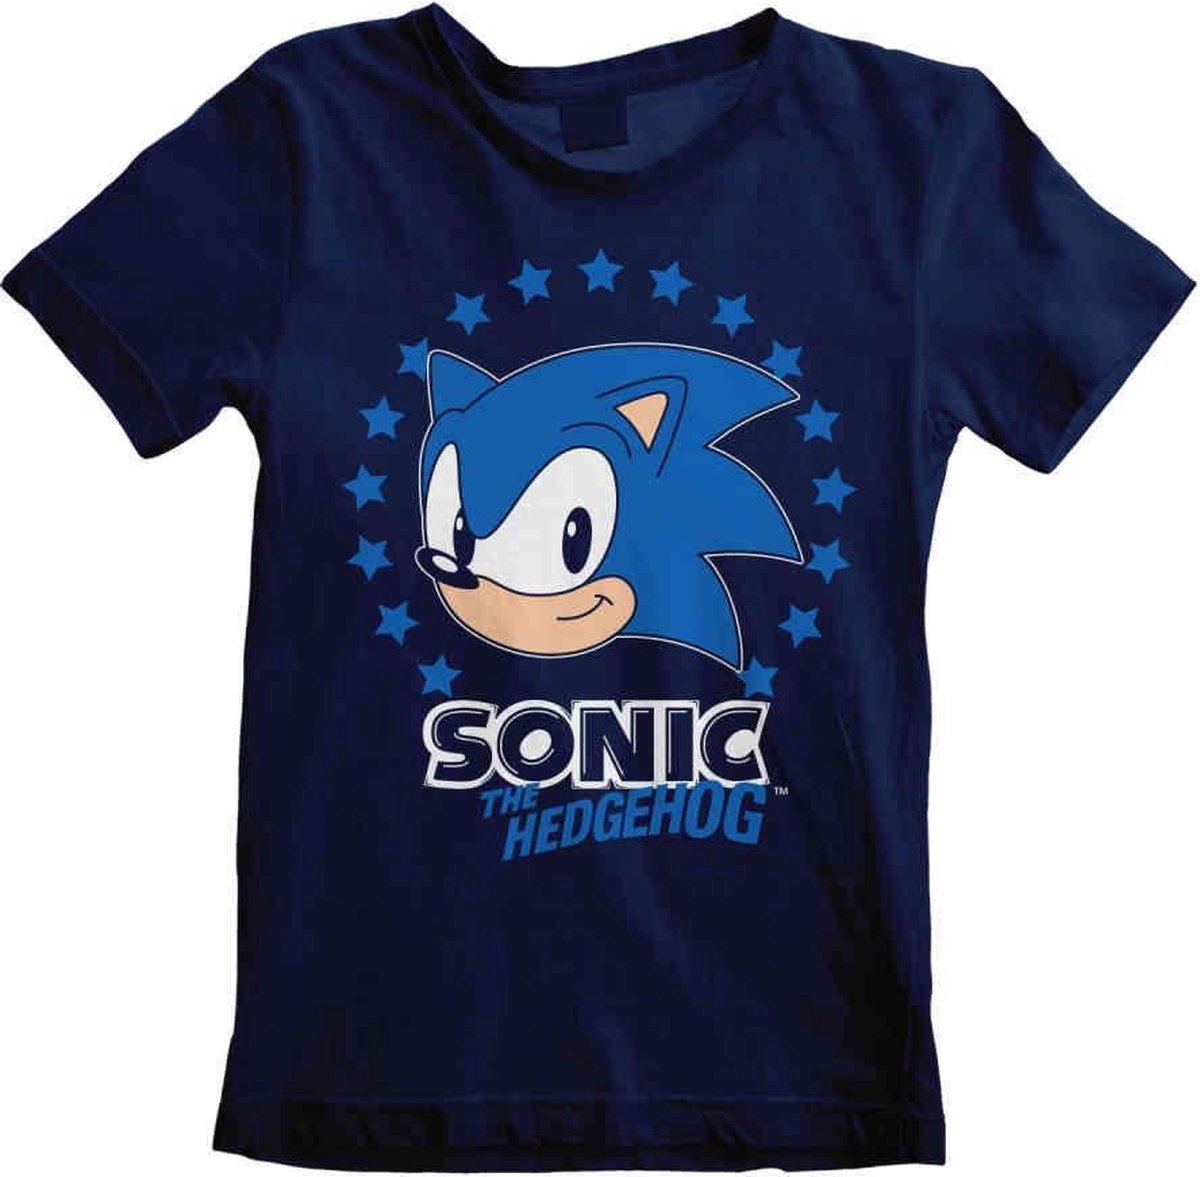 Sonic The Hedgehog Kinder Tshirt -Kids tm 6 jaar- Stars Blauw | bol.com